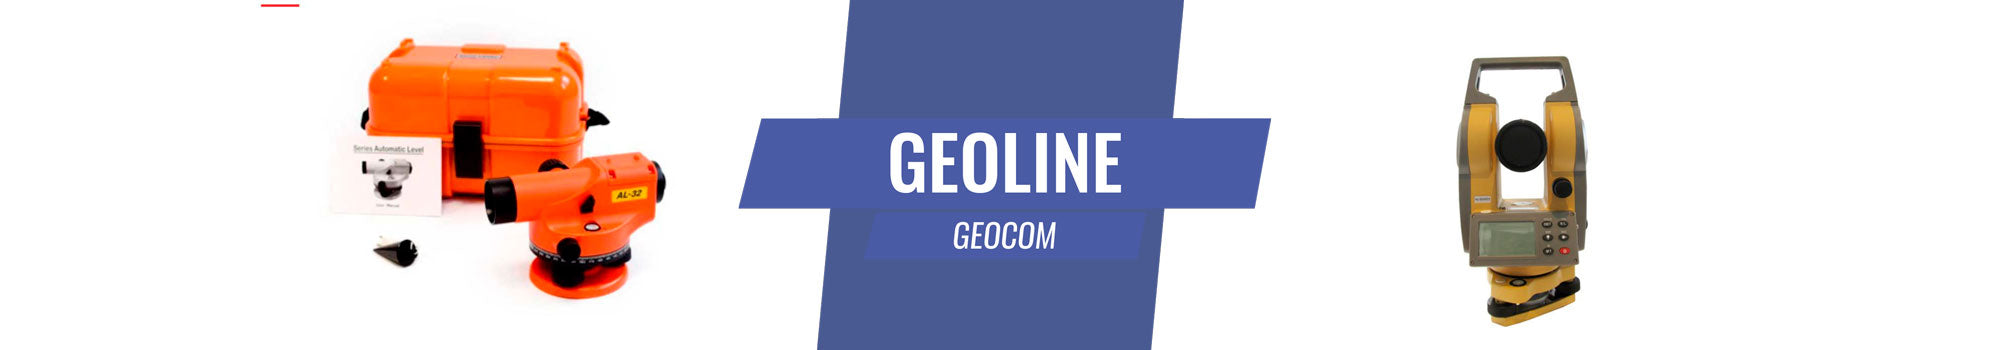 Geoline